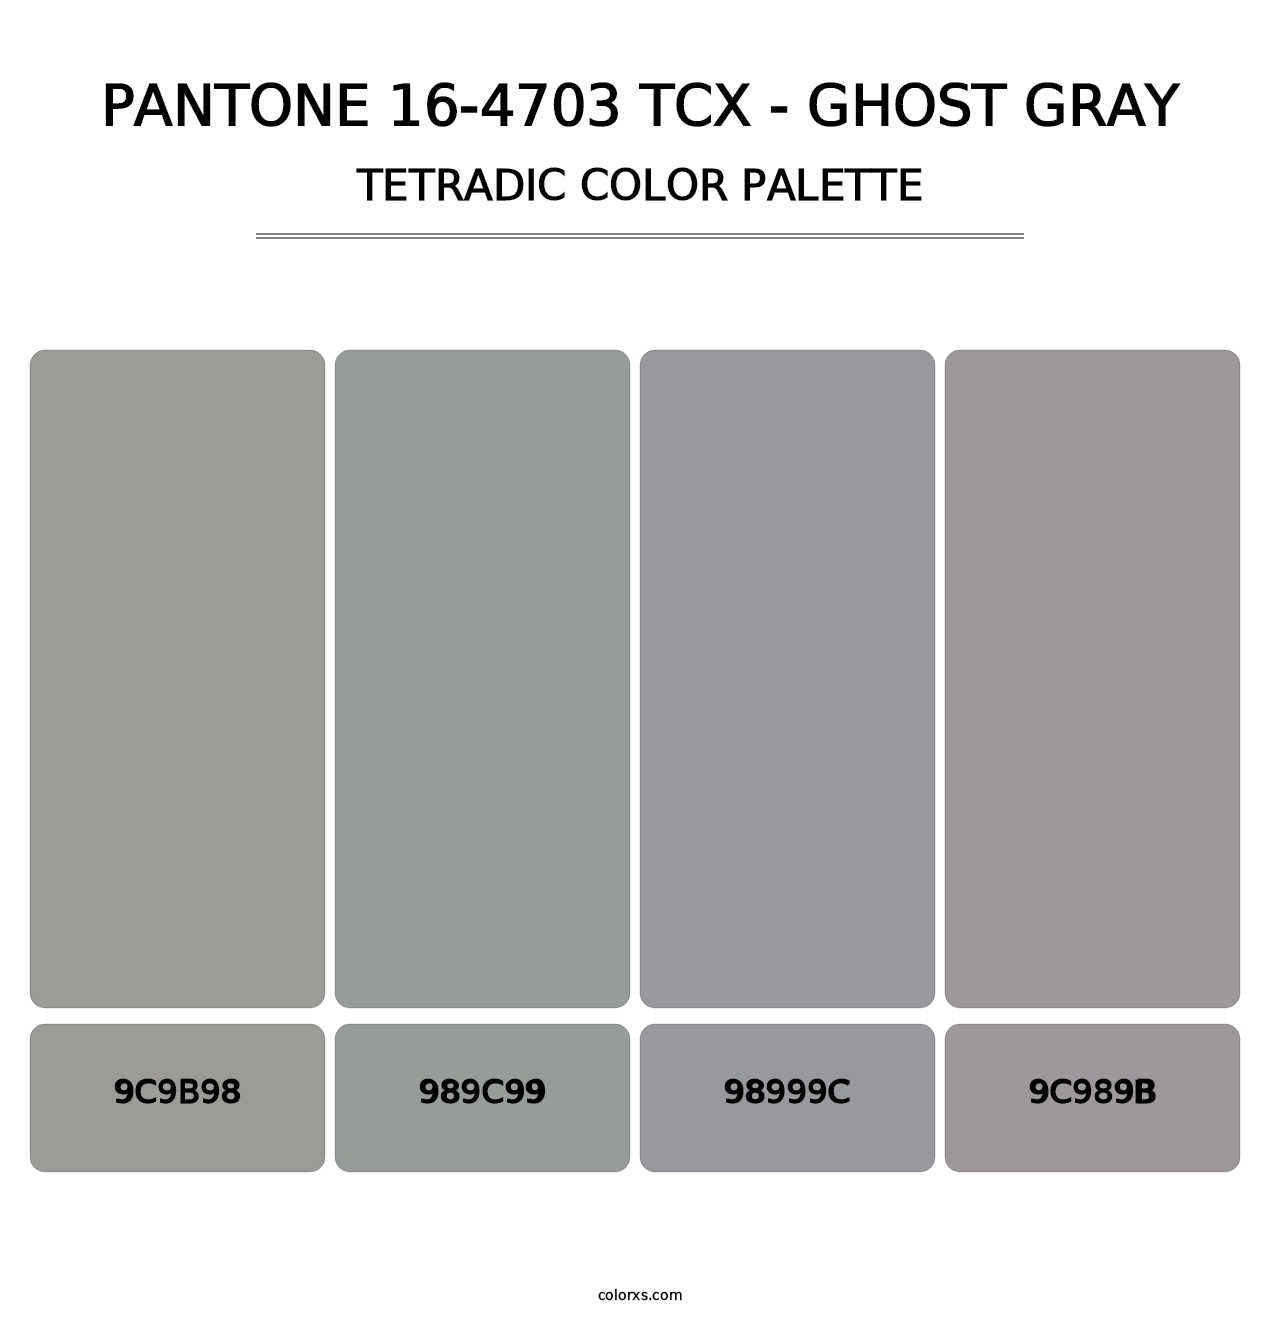 PANTONE 16-4703 TCX - Ghost Gray - Tetradic Color Palette